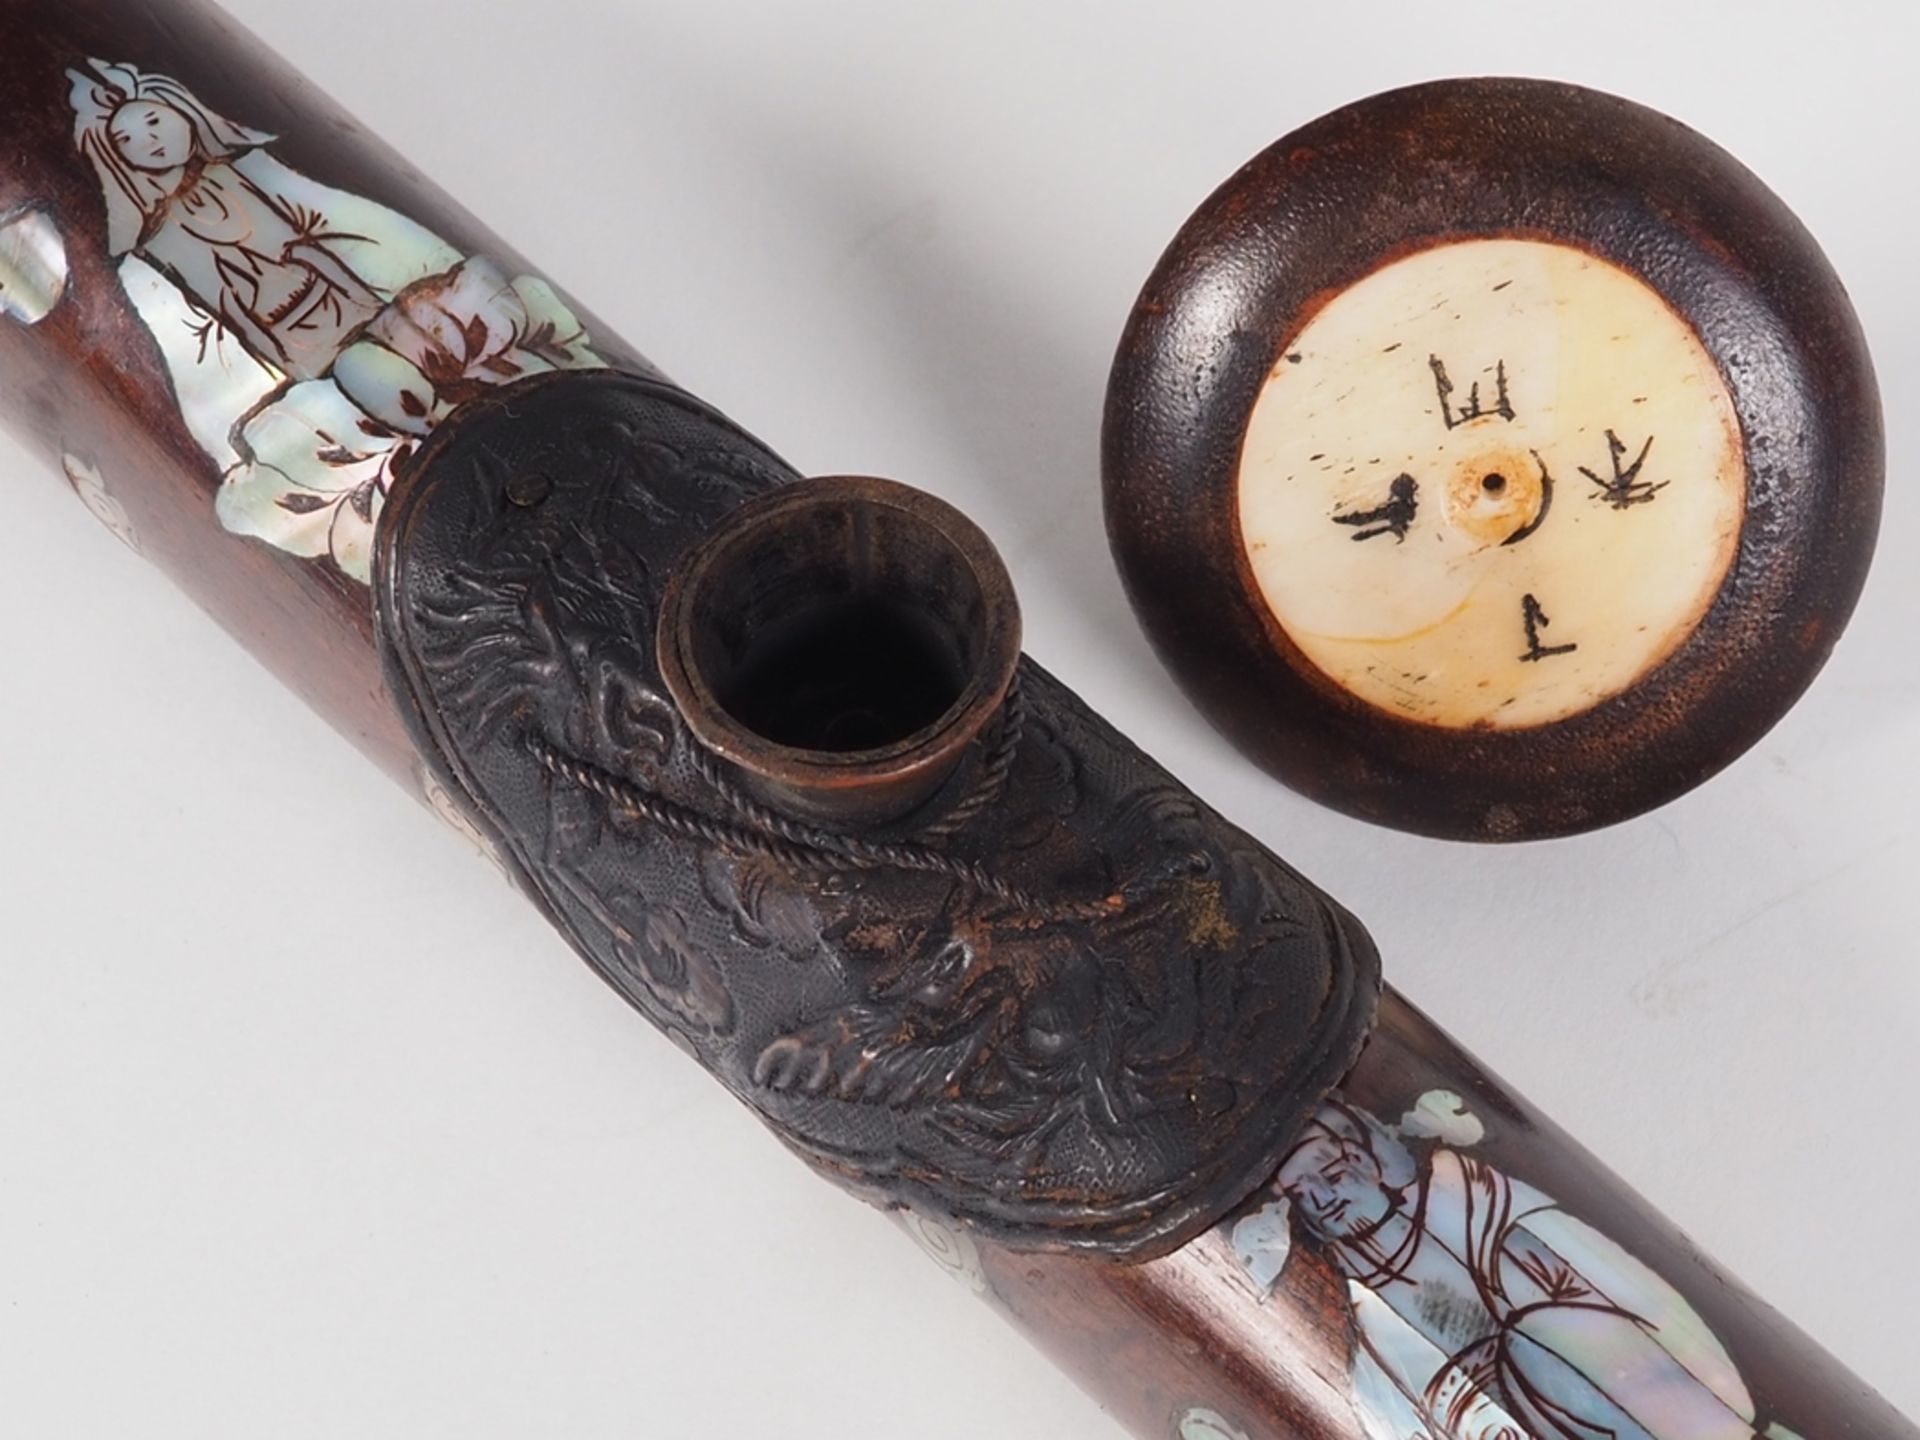 Große Opiumpfeife aus Holz, wohl China Anfang 20. Jh. - Bild 2 aus 5